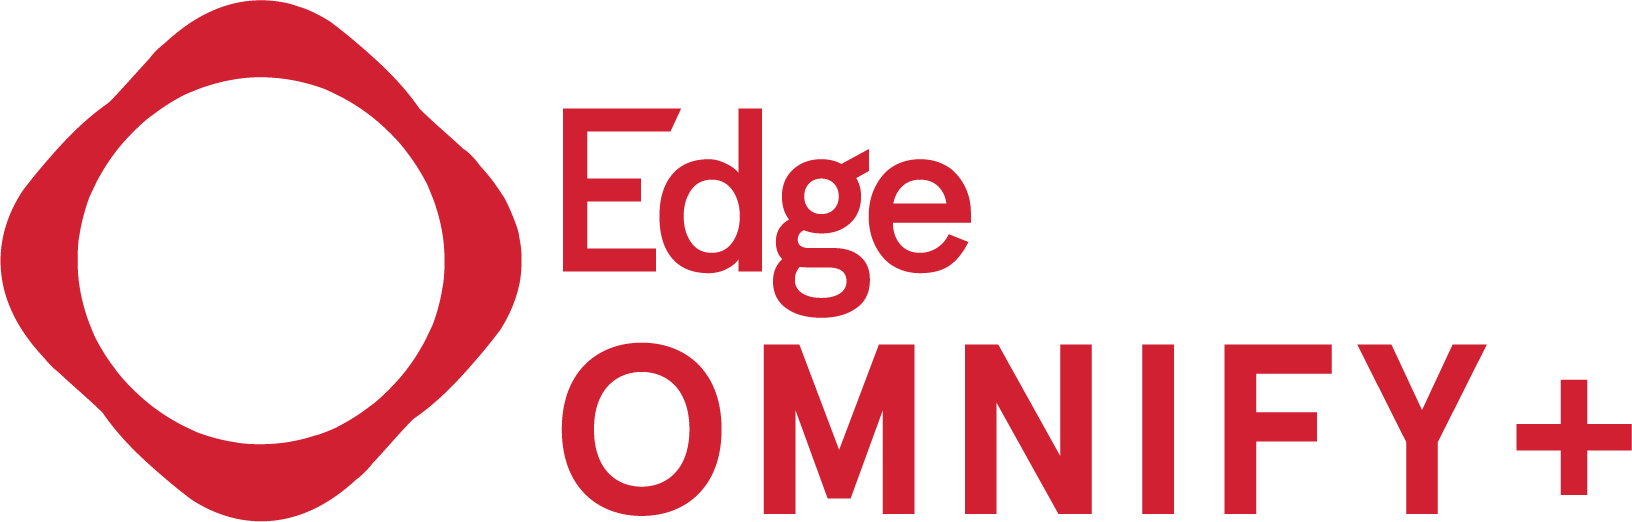 omnify+_edge_red_logo